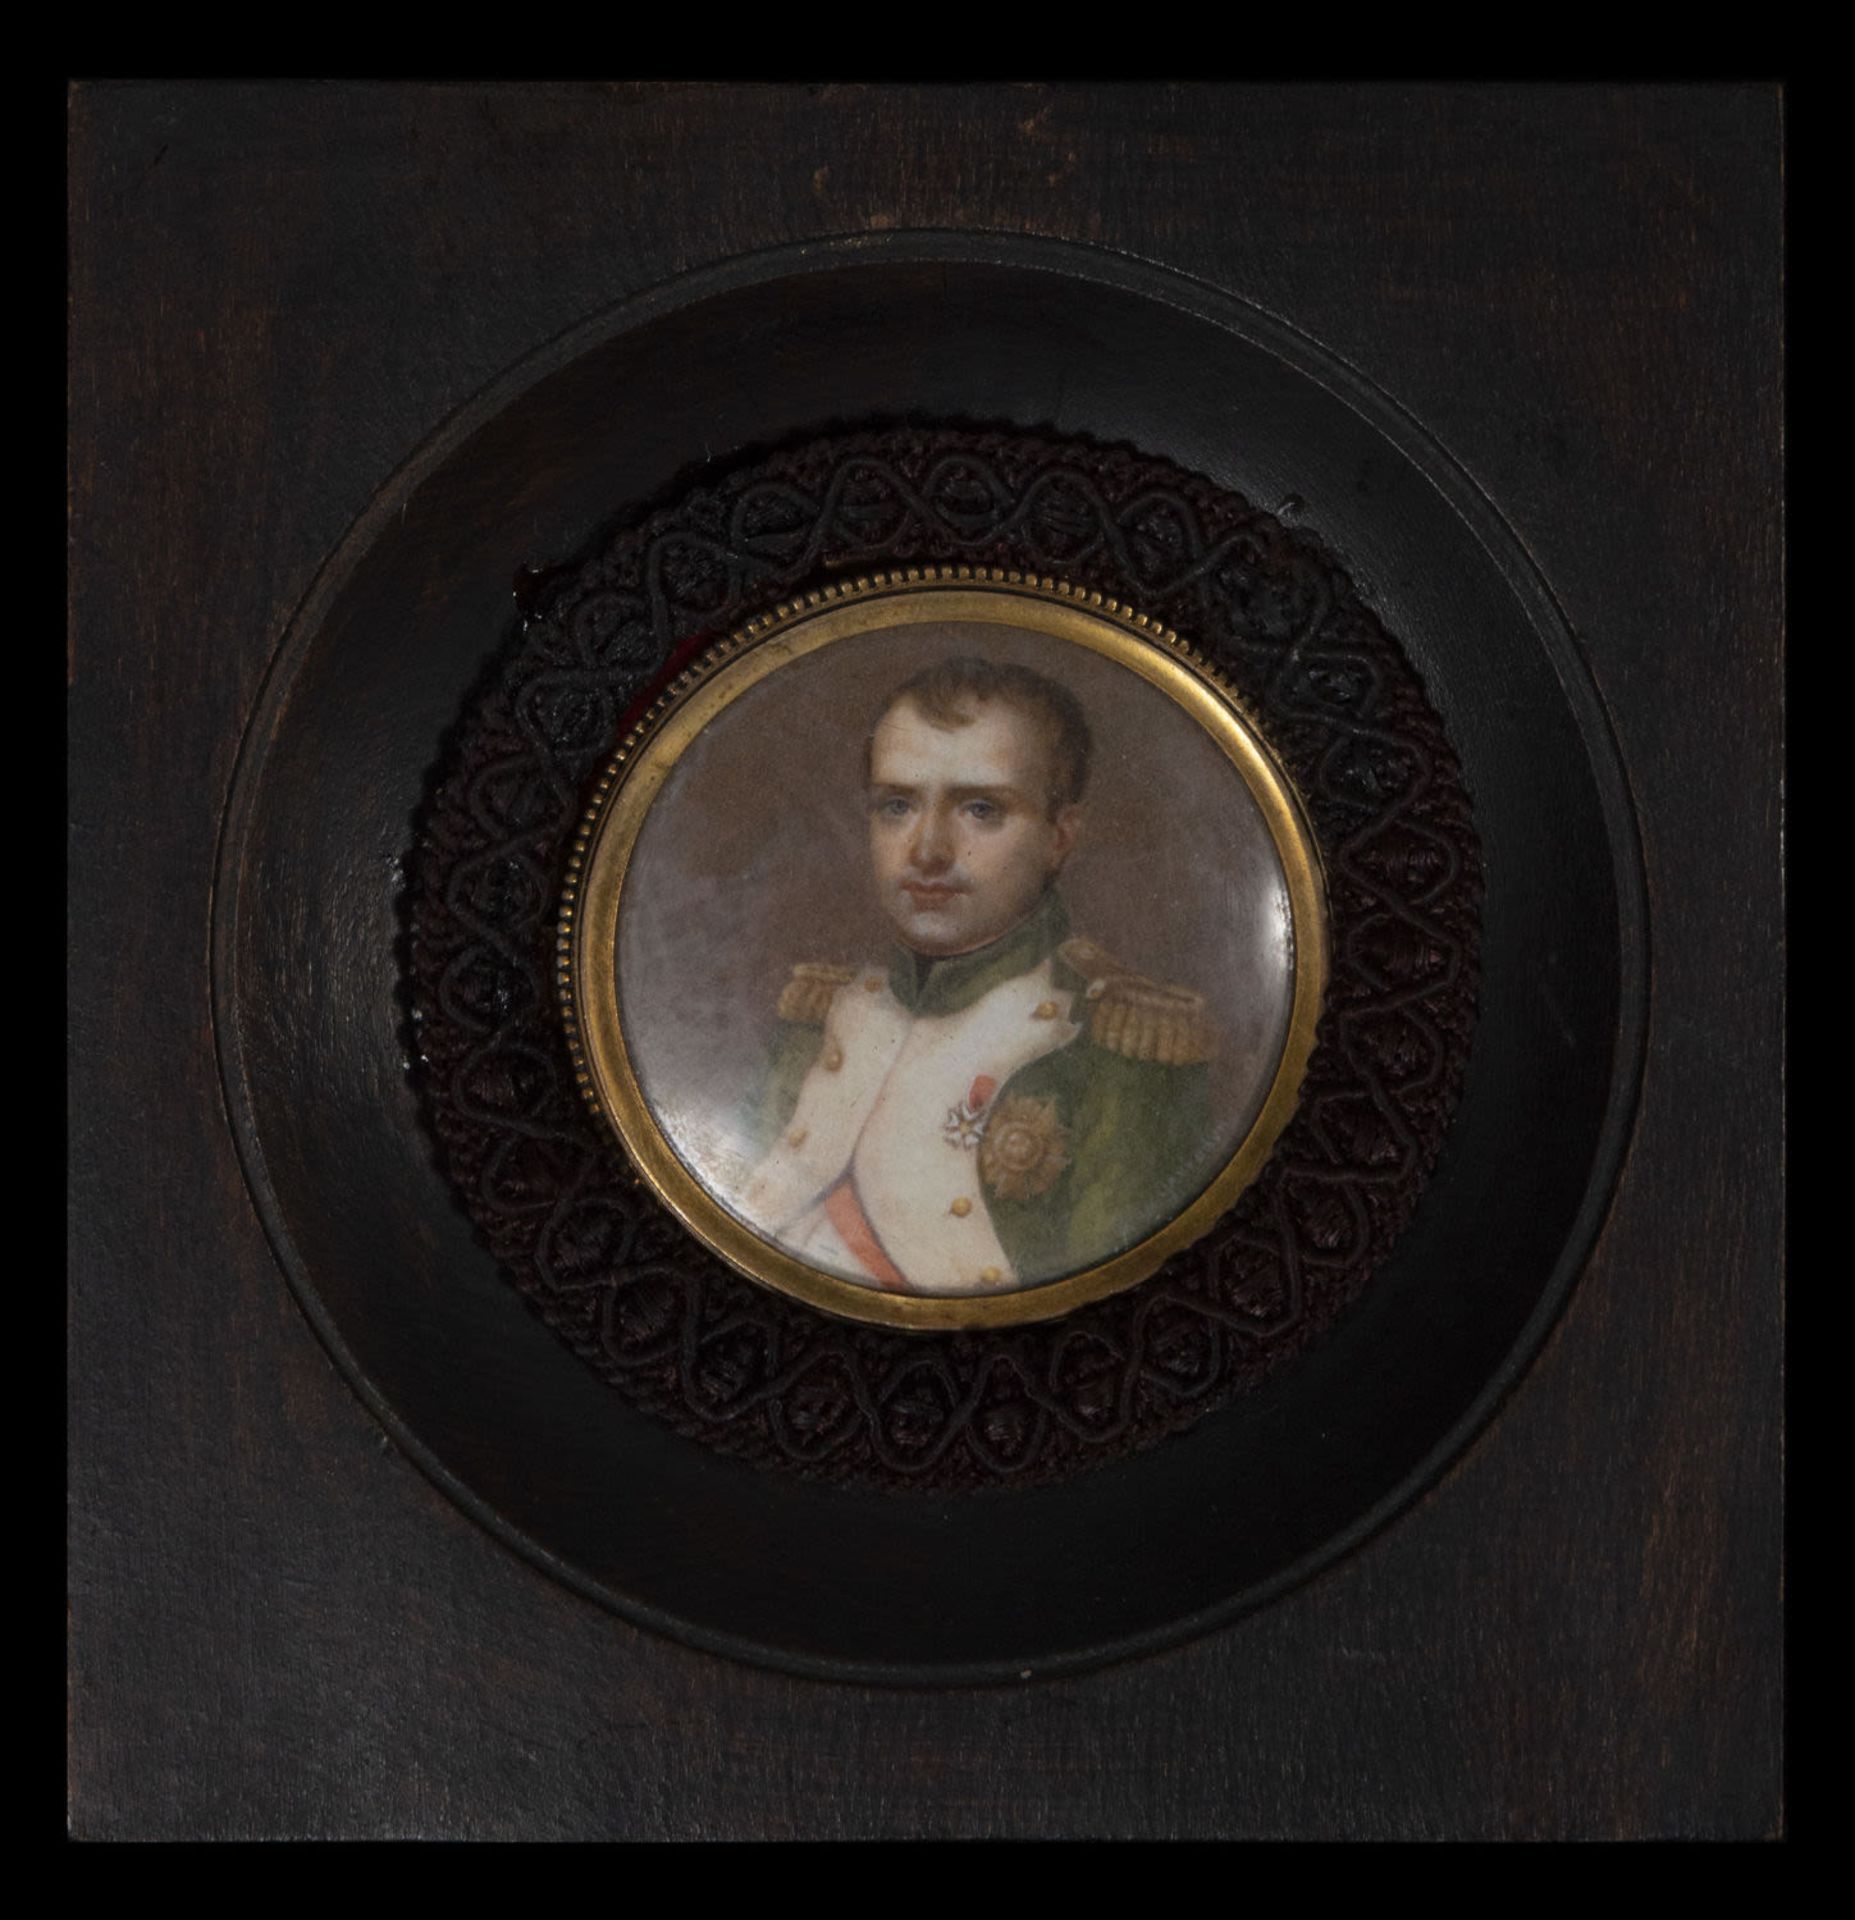 Miniature portrait of Joseph Bonaparte, French school of the early 19th century